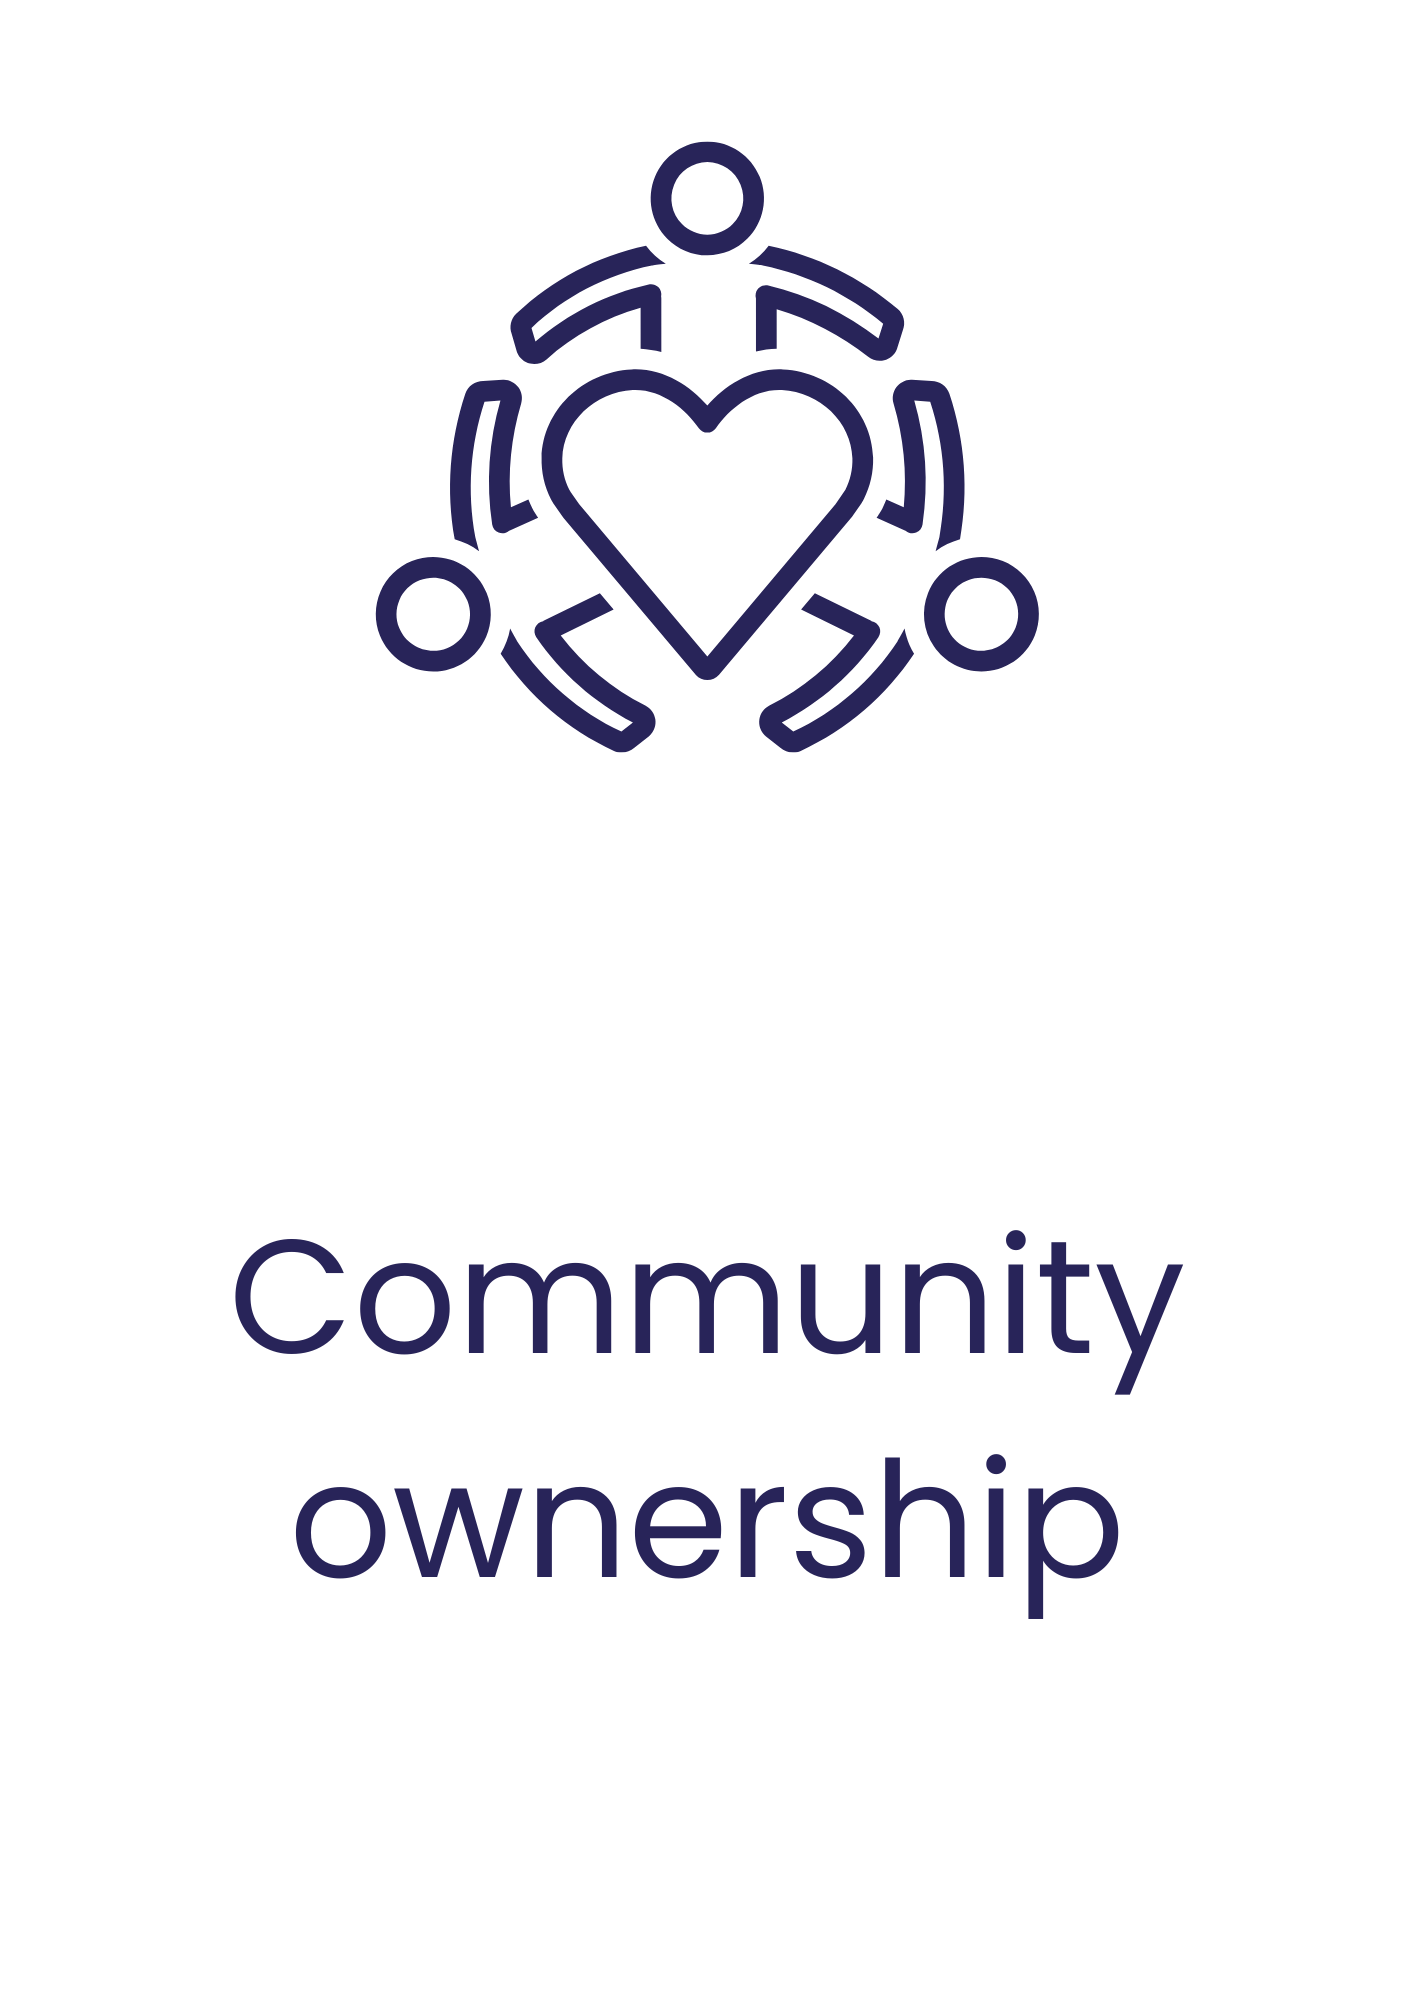 Community ownership funding